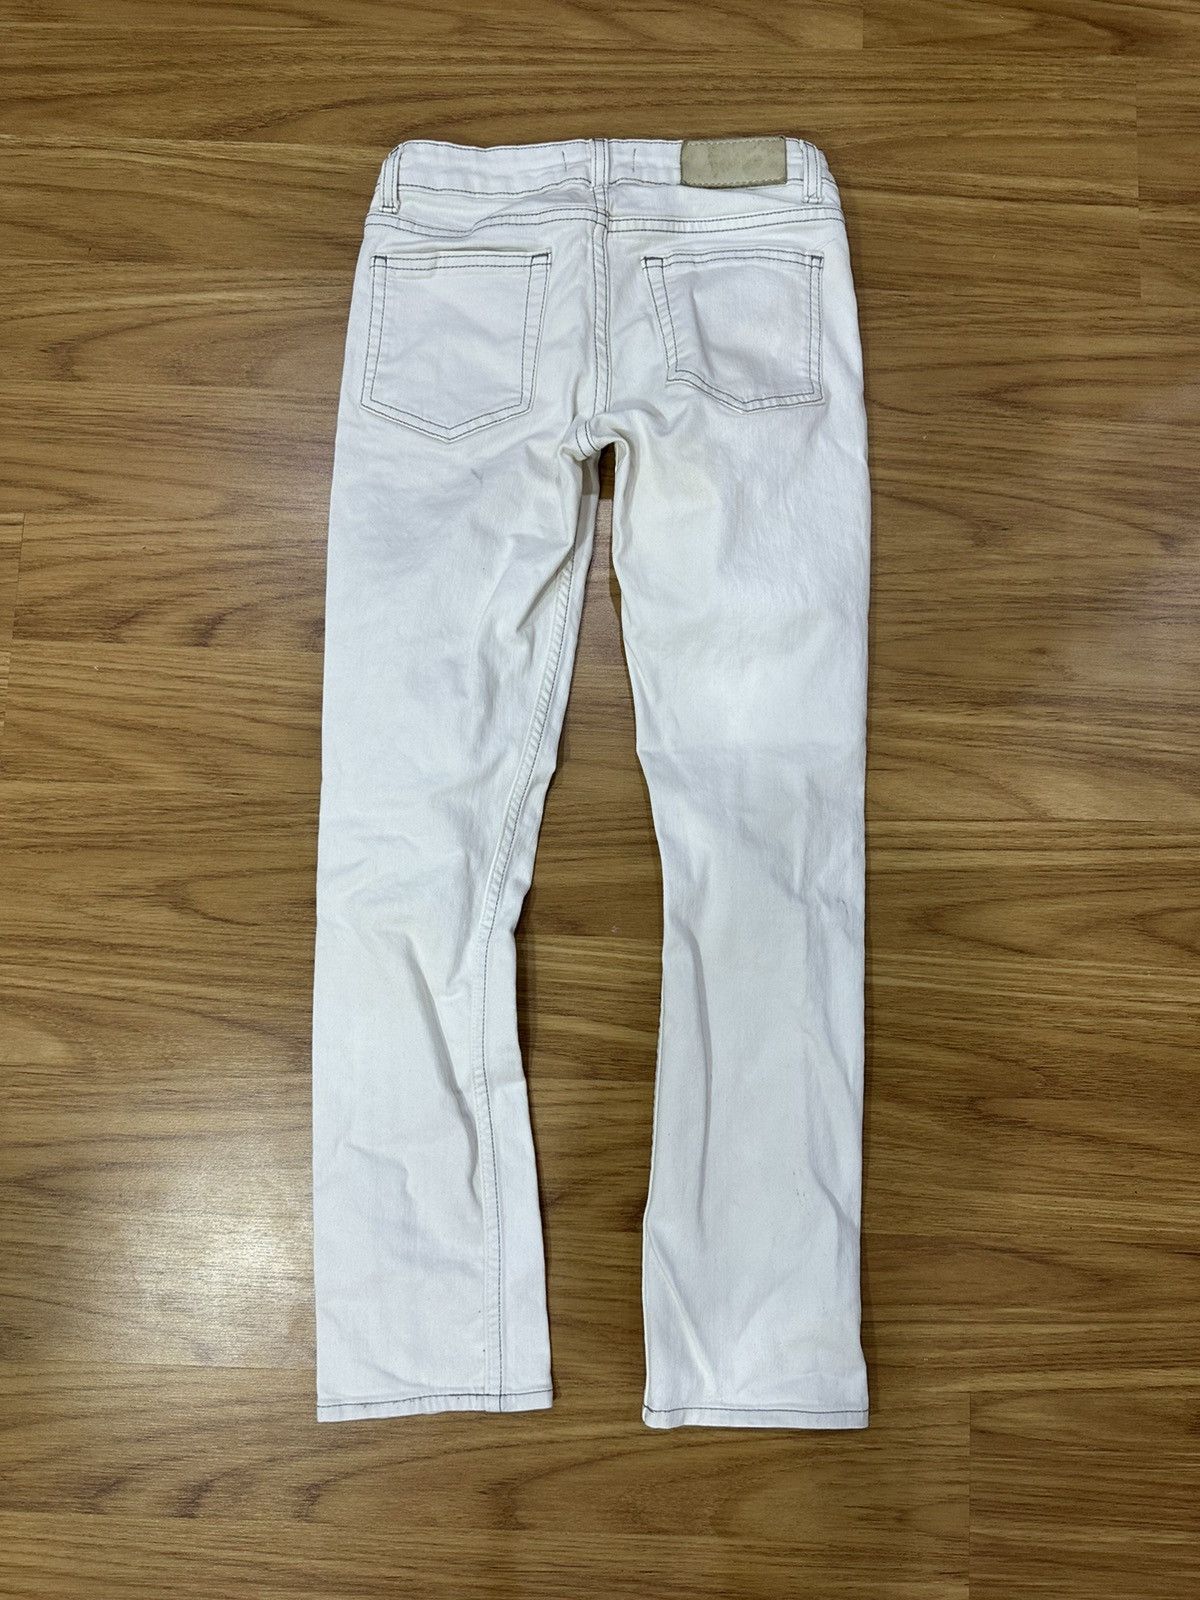 SS15 Acne Studios White Skinny Jeans - 14